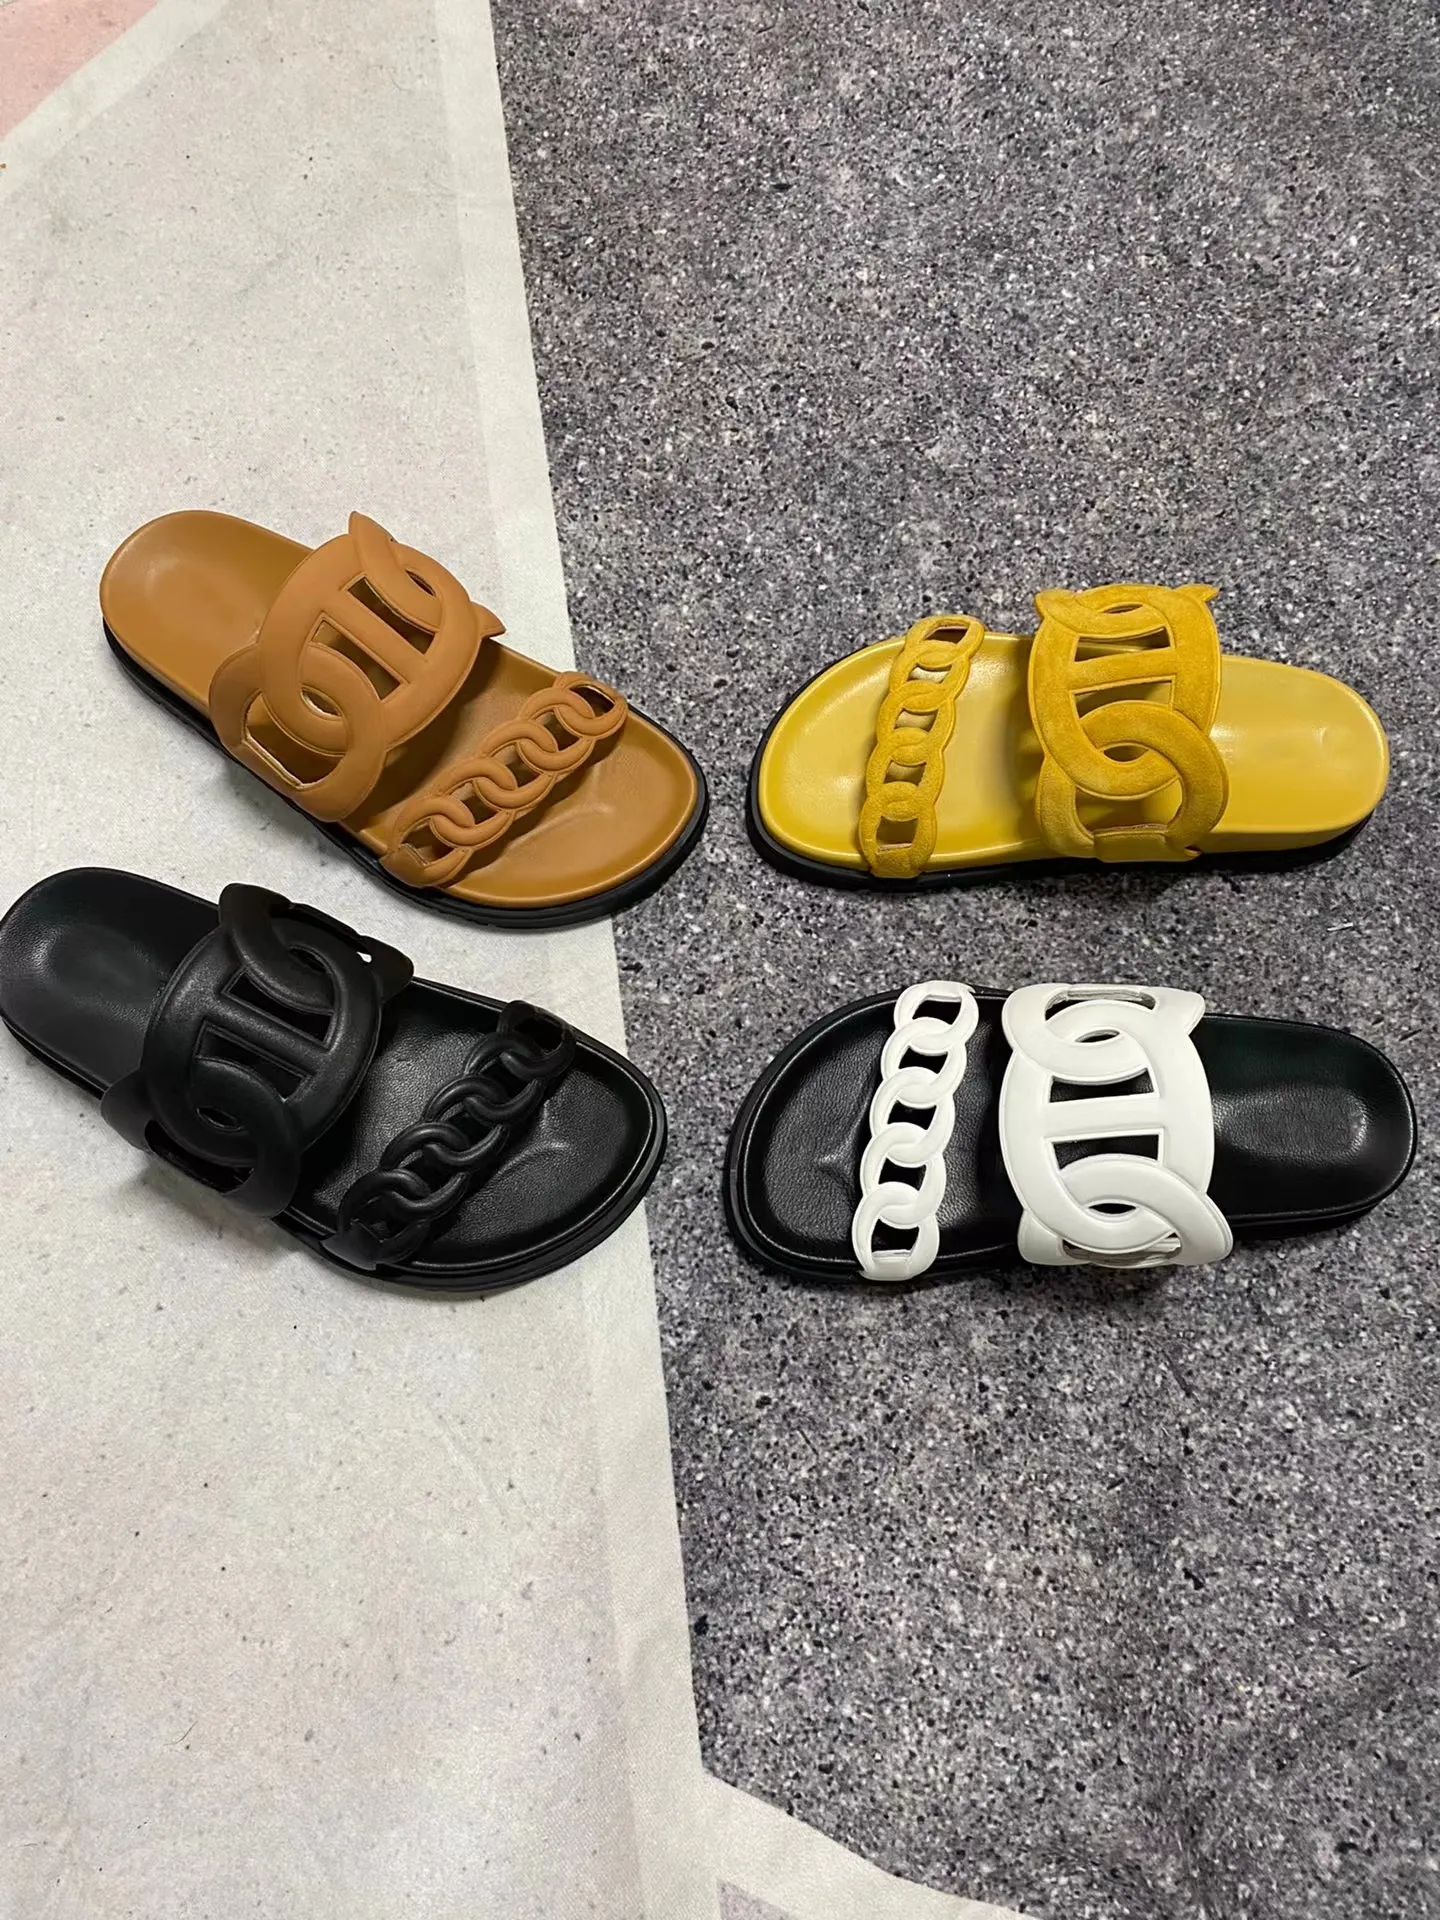 Designer shoes Chypre Slippers designer sandals Women slides Leather Sandals Men Ladies Flip Flops Summer Beach Flat Slippers high quality with box 35-46